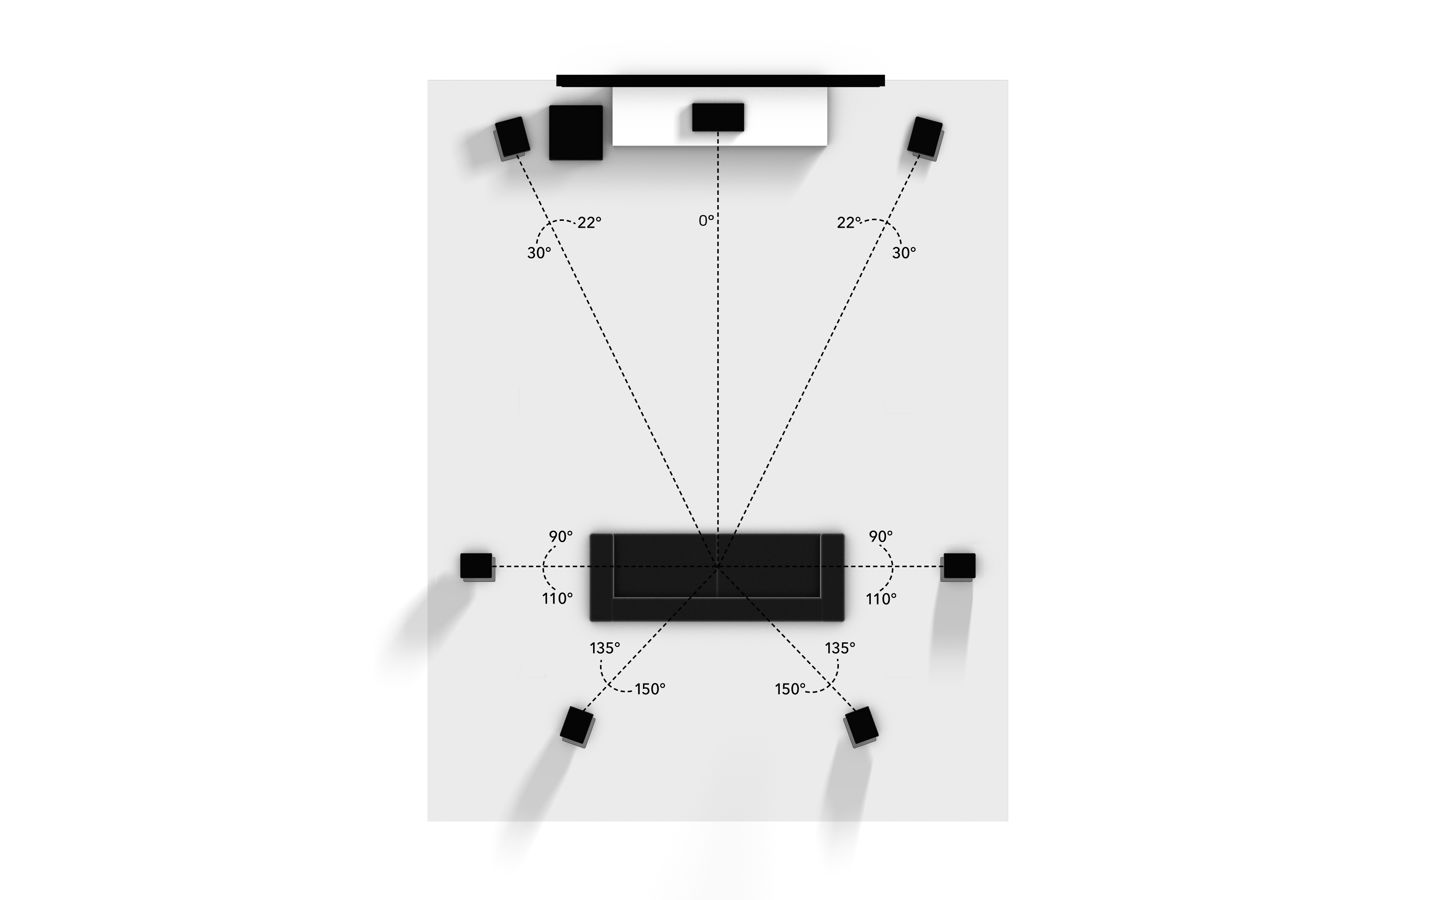 laser Schaduw gezantschap 7.1 Virtual Speaker Setup - Dolby